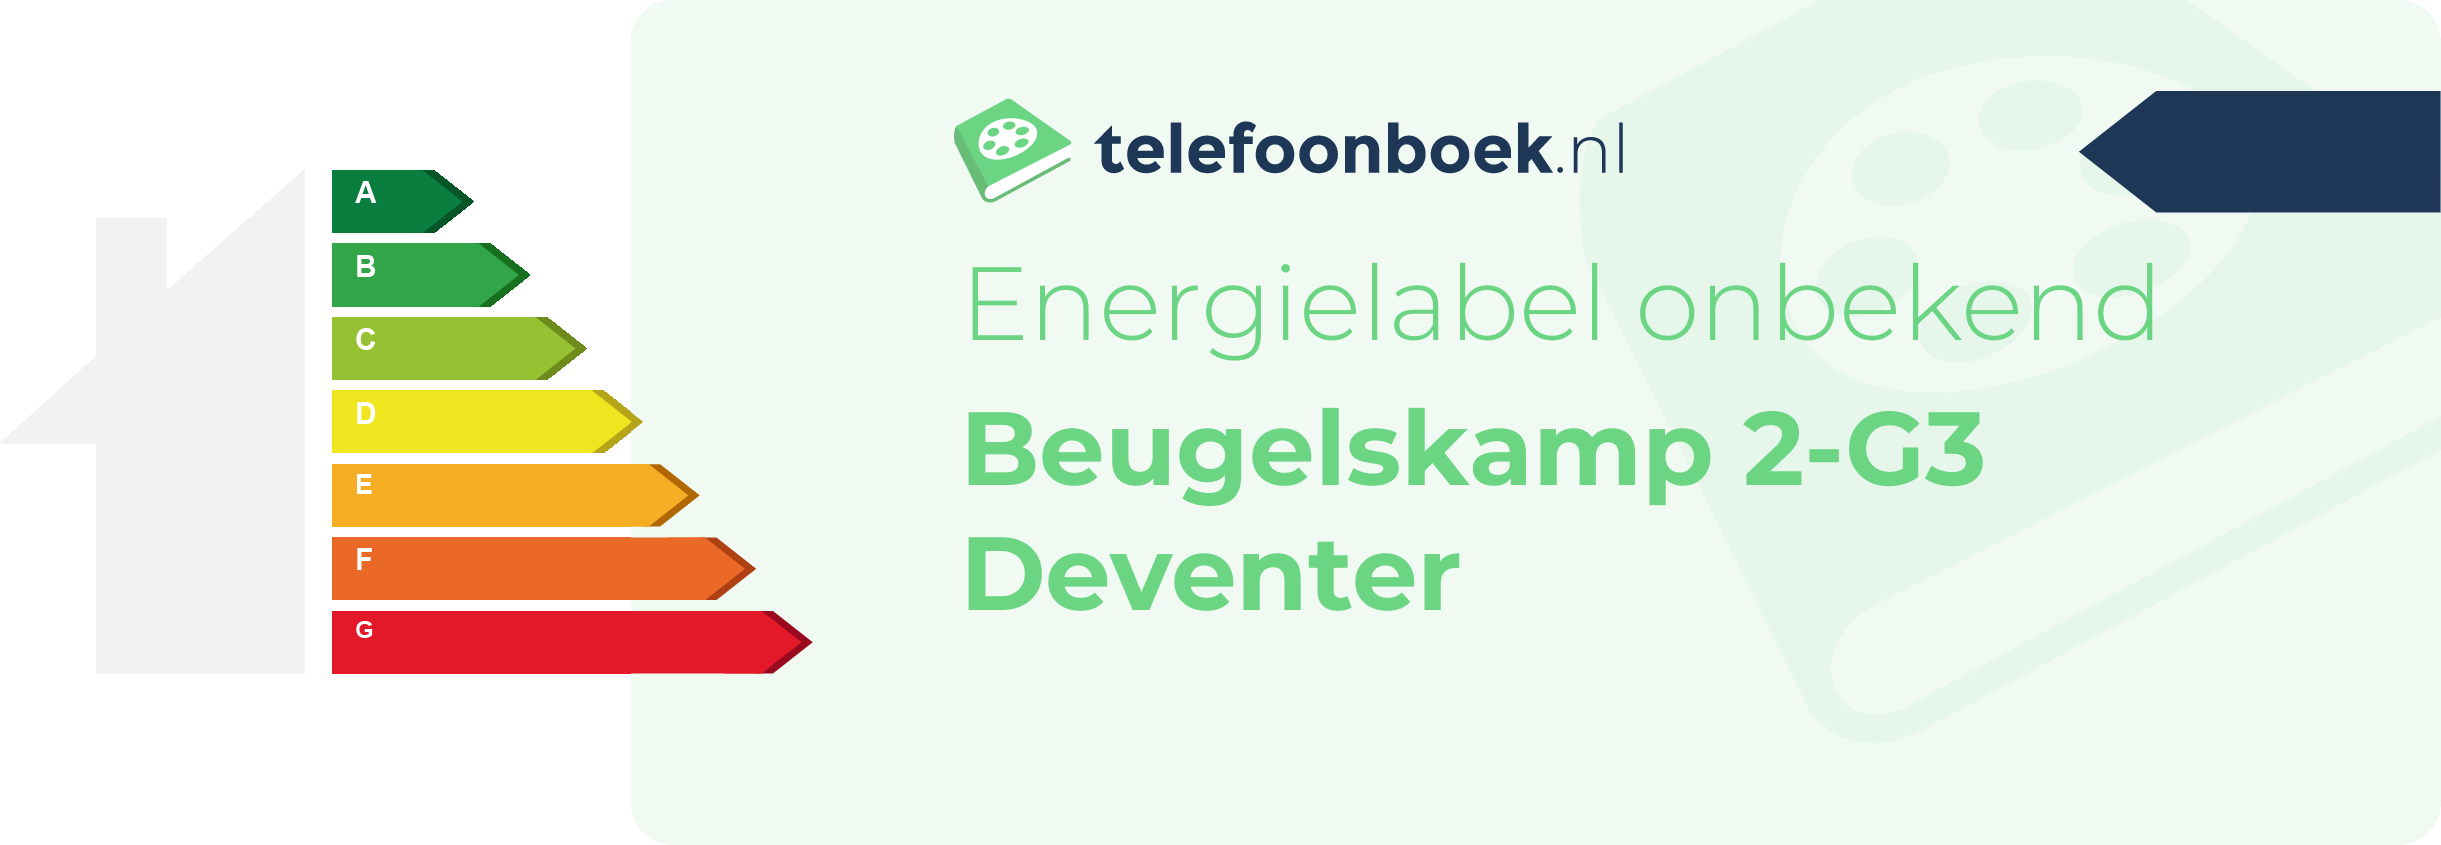 Energielabel Beugelskamp 2-G3 Deventer